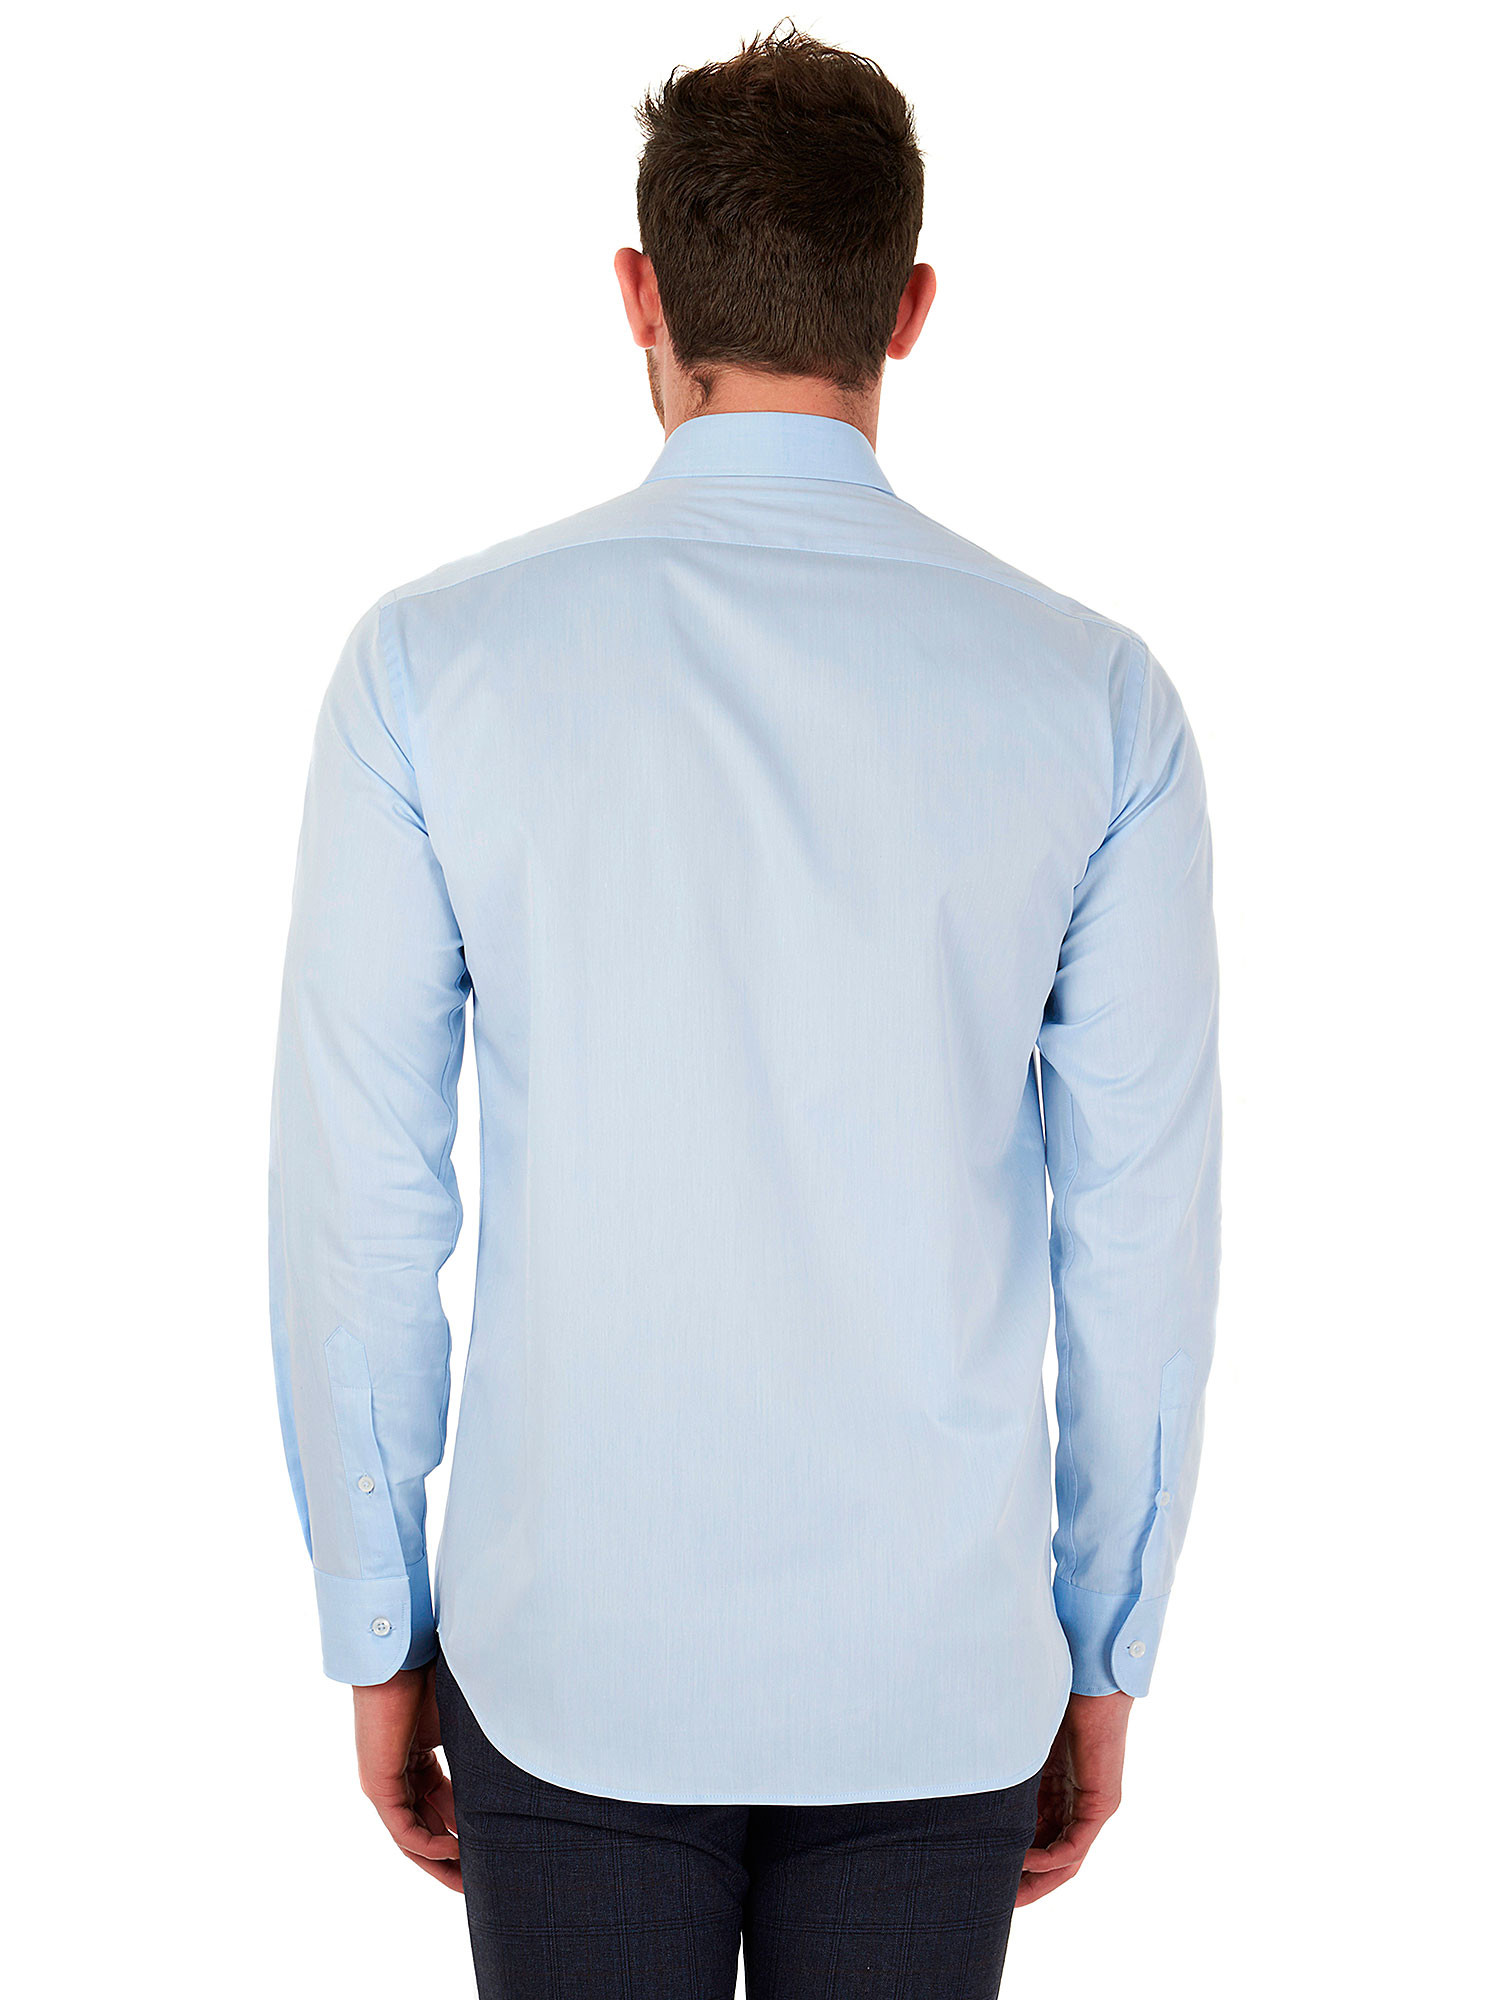 Marcus classic sky blue shirt 100% cotton